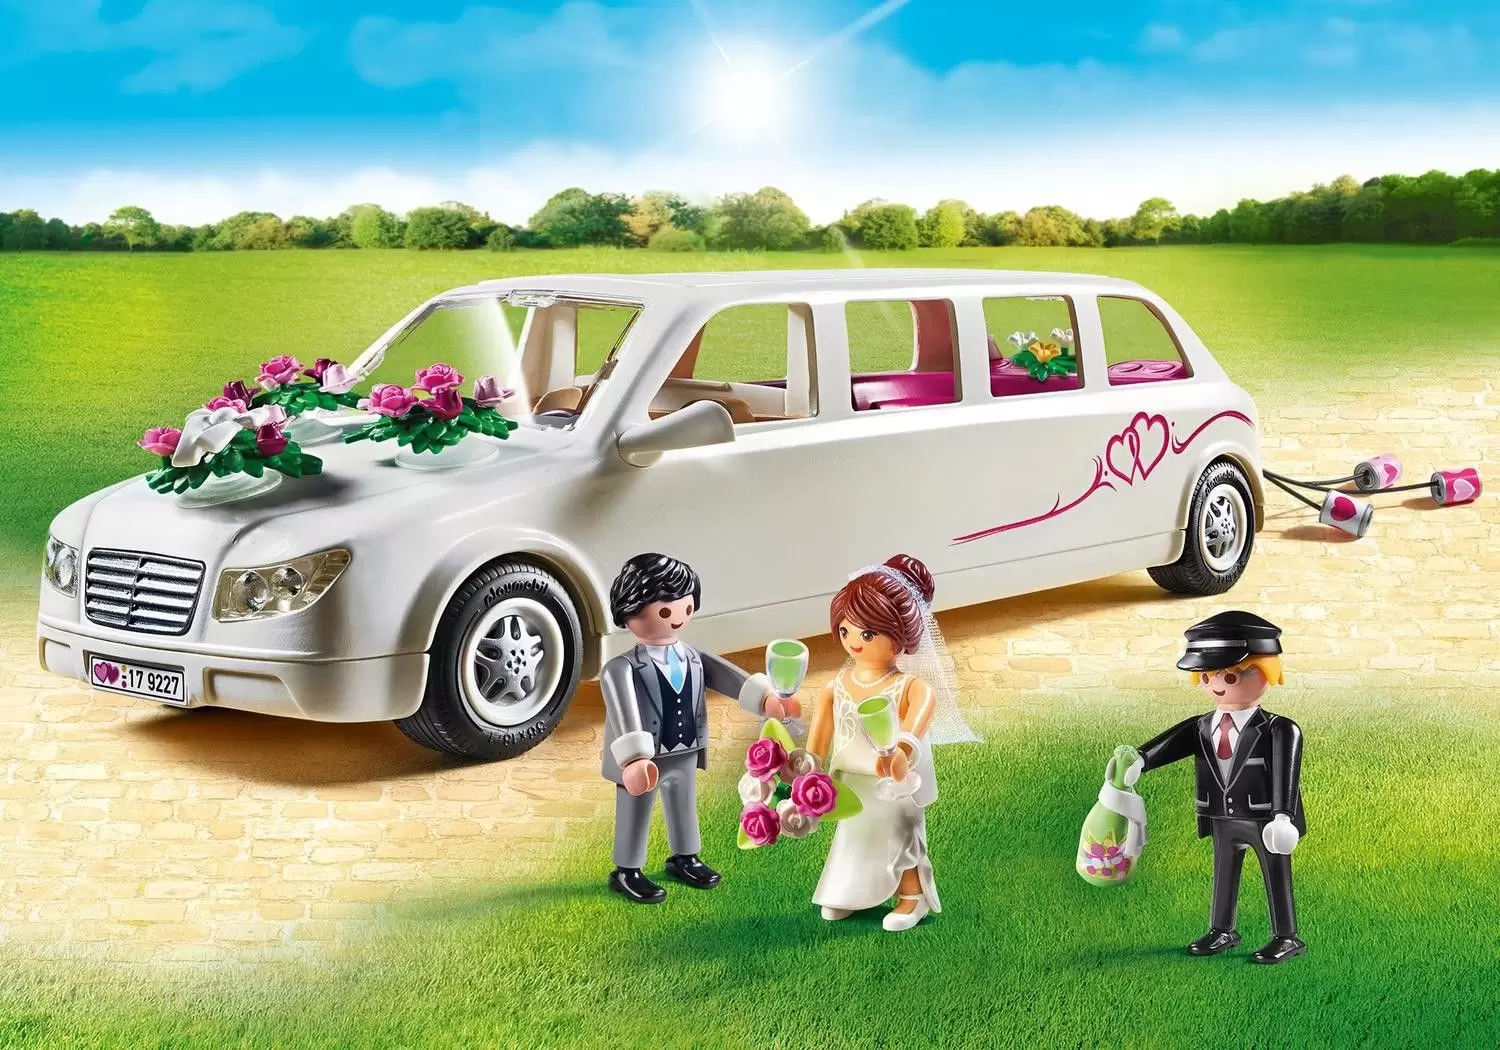 Playmobil Wedding - Wedding gowns